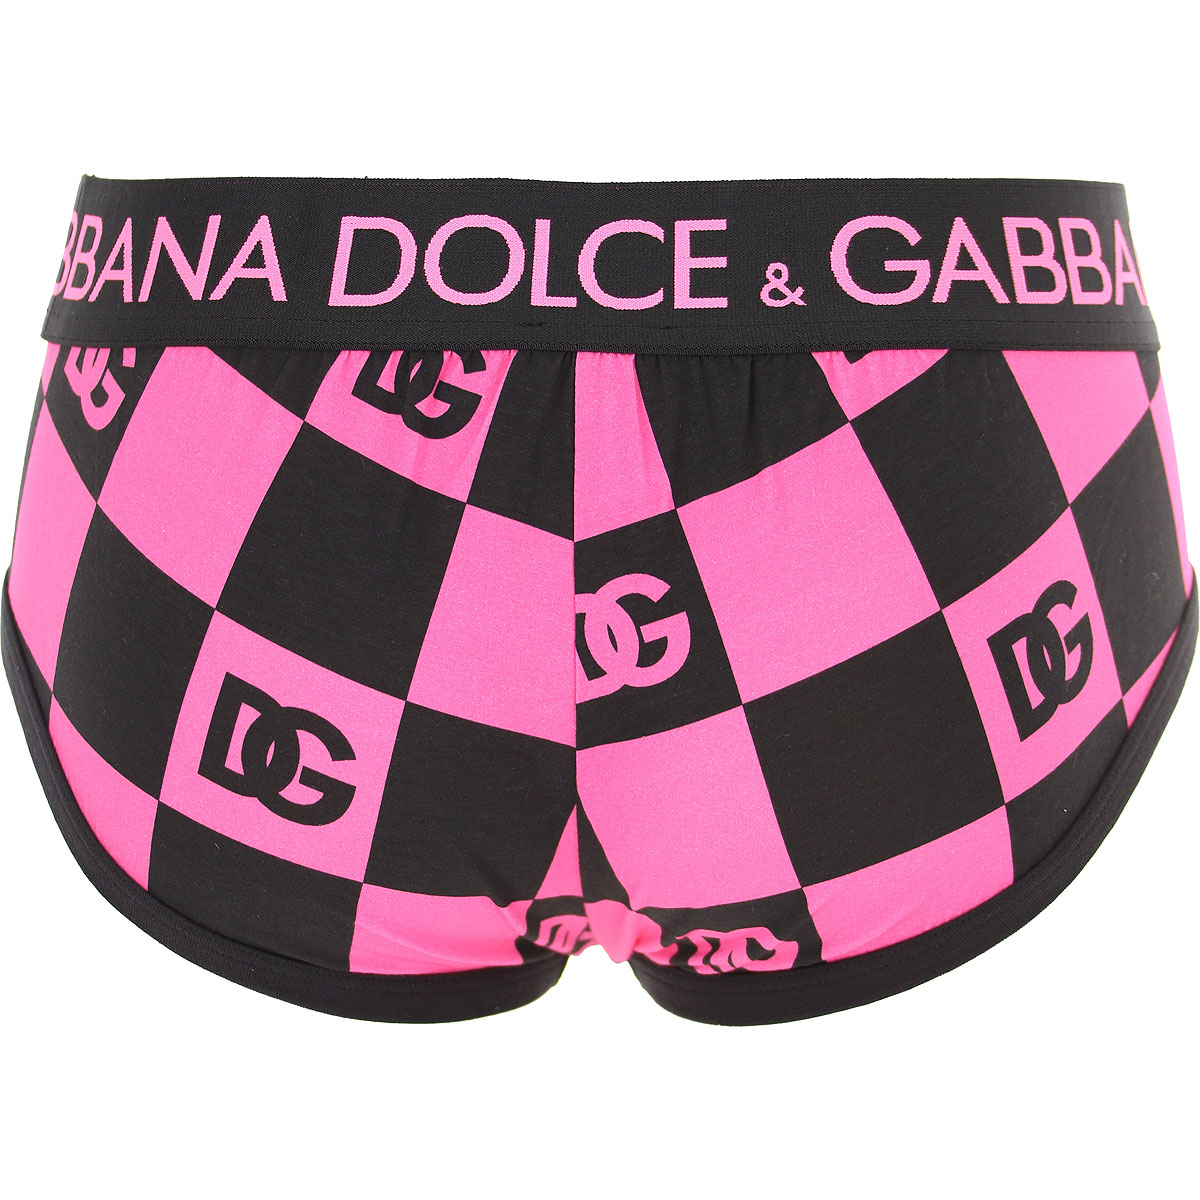 Mens Underwear Dolce & Gabbana, Style code: m3d81j-fseh2-he4cg